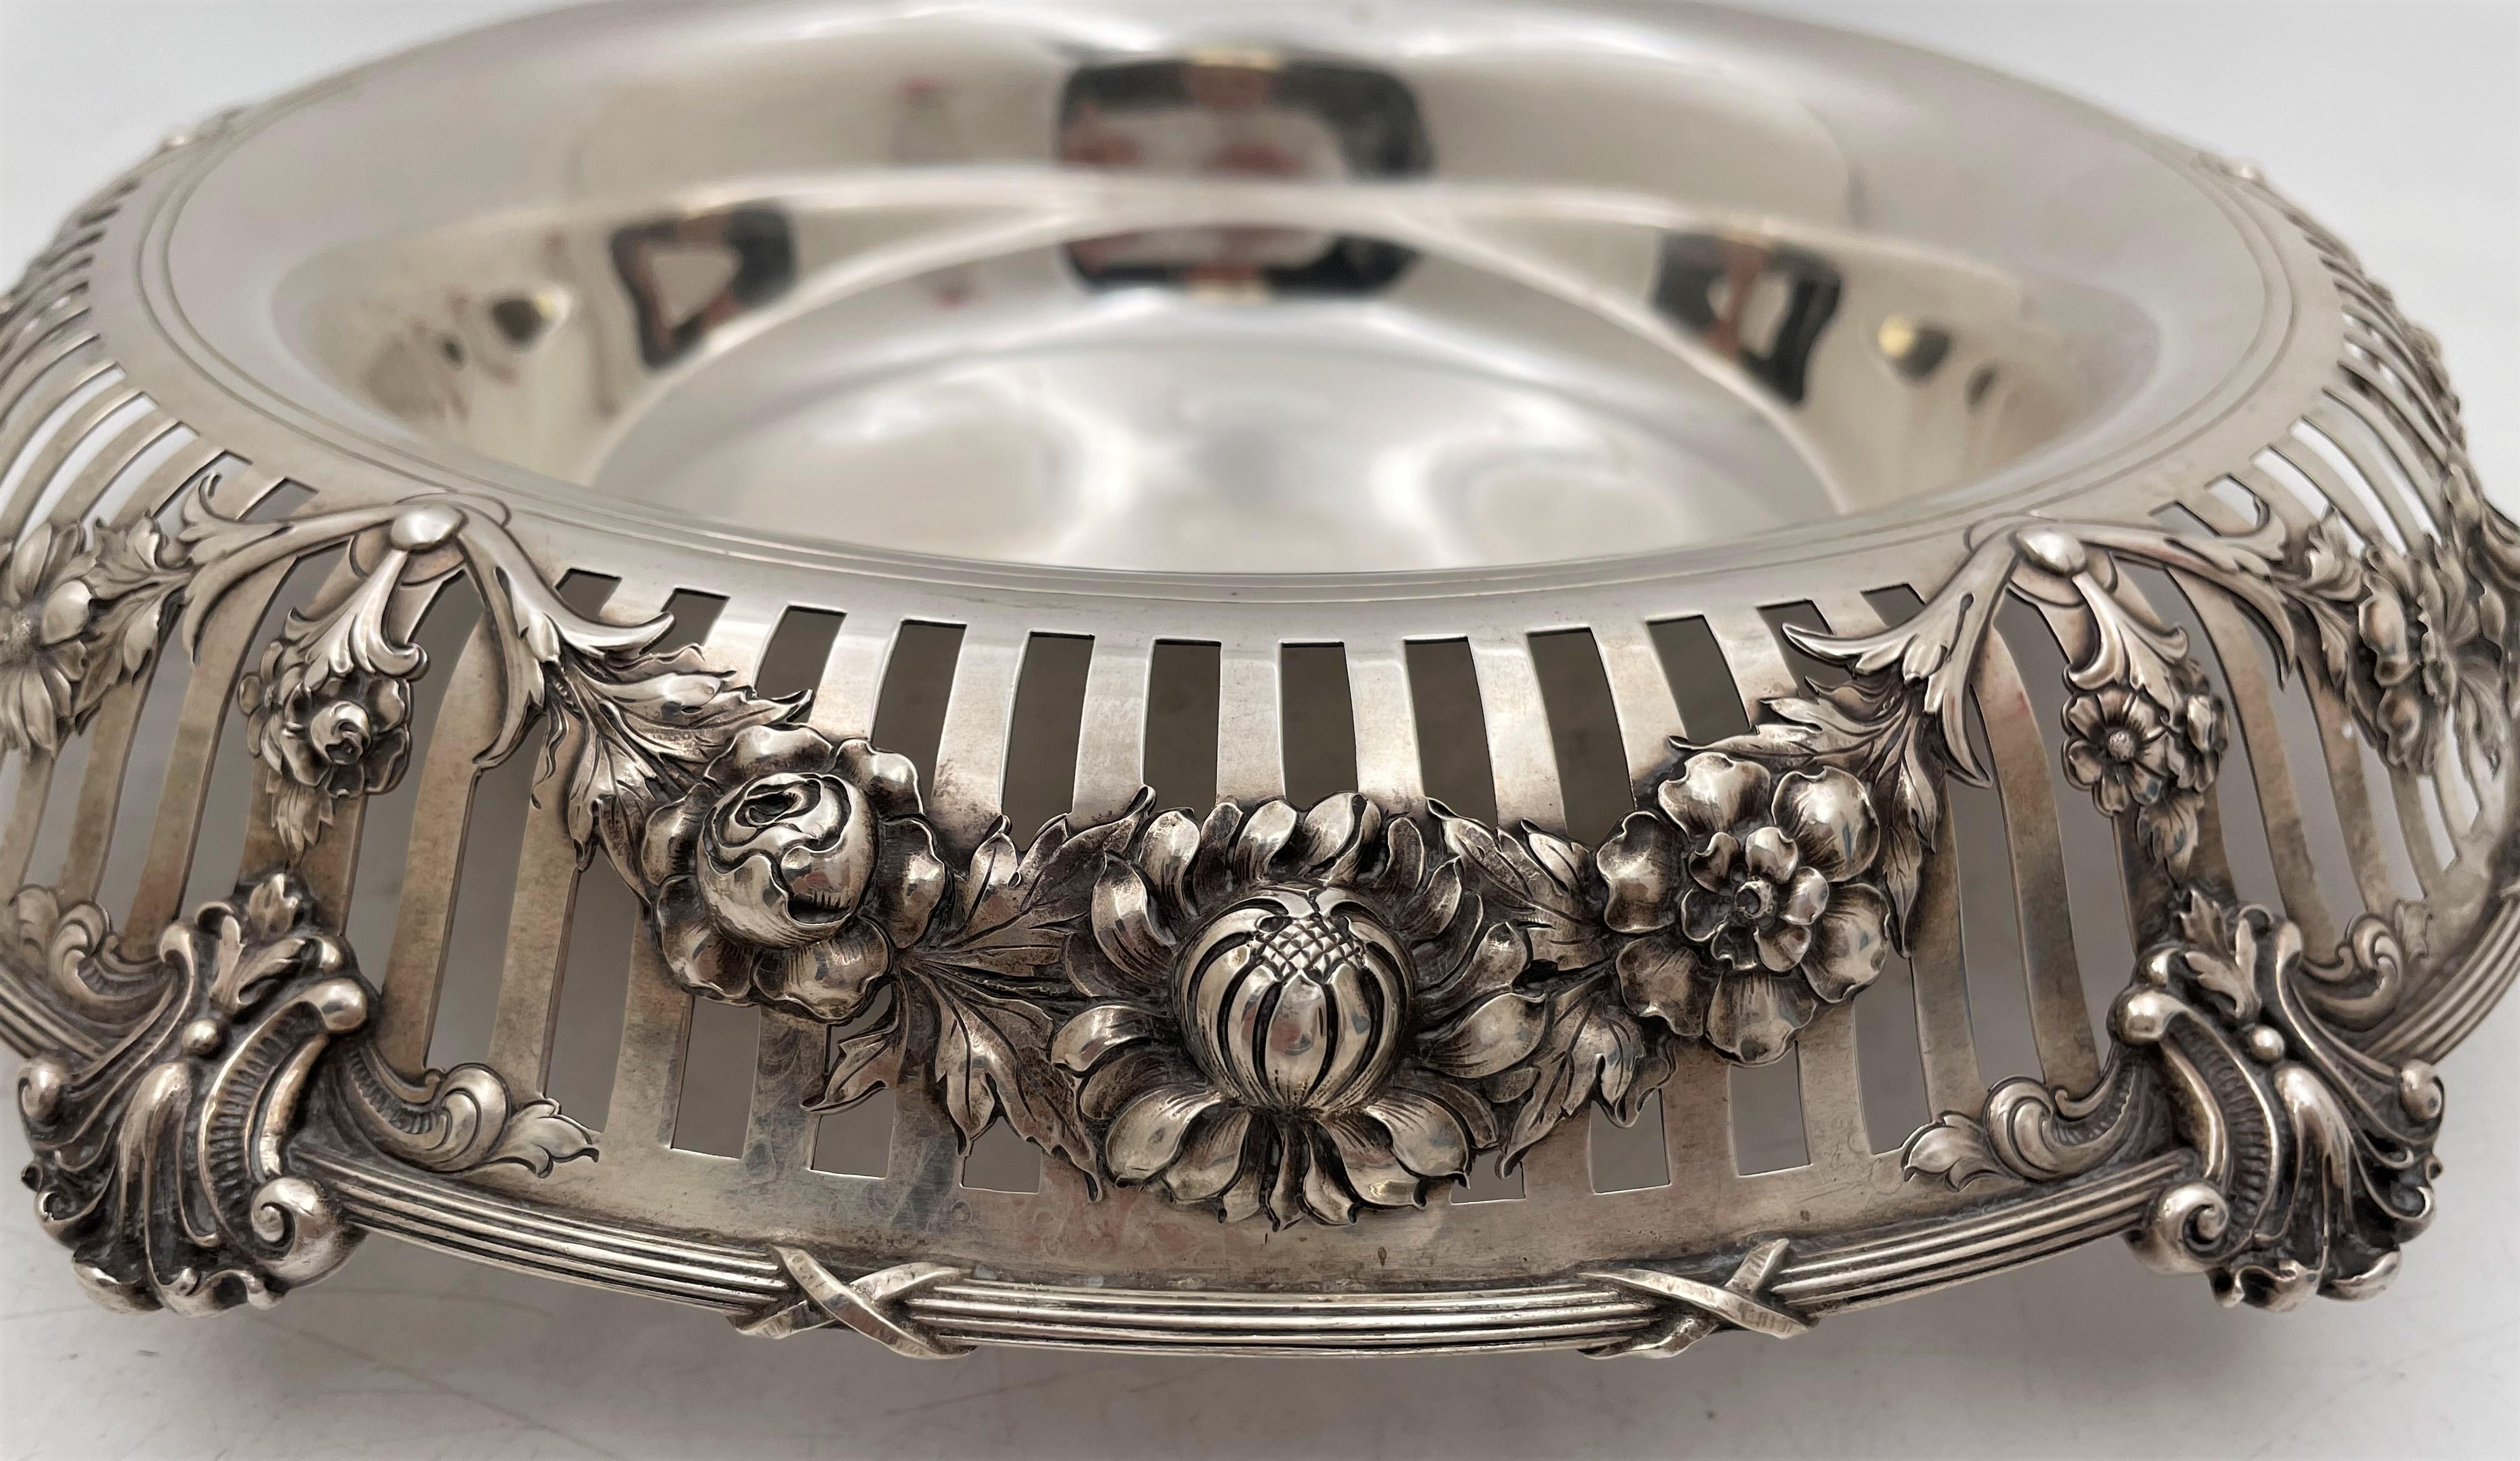 Gorham Sterling Silver 1911 Centerpiece Bowl in Art Nouveau Style 1